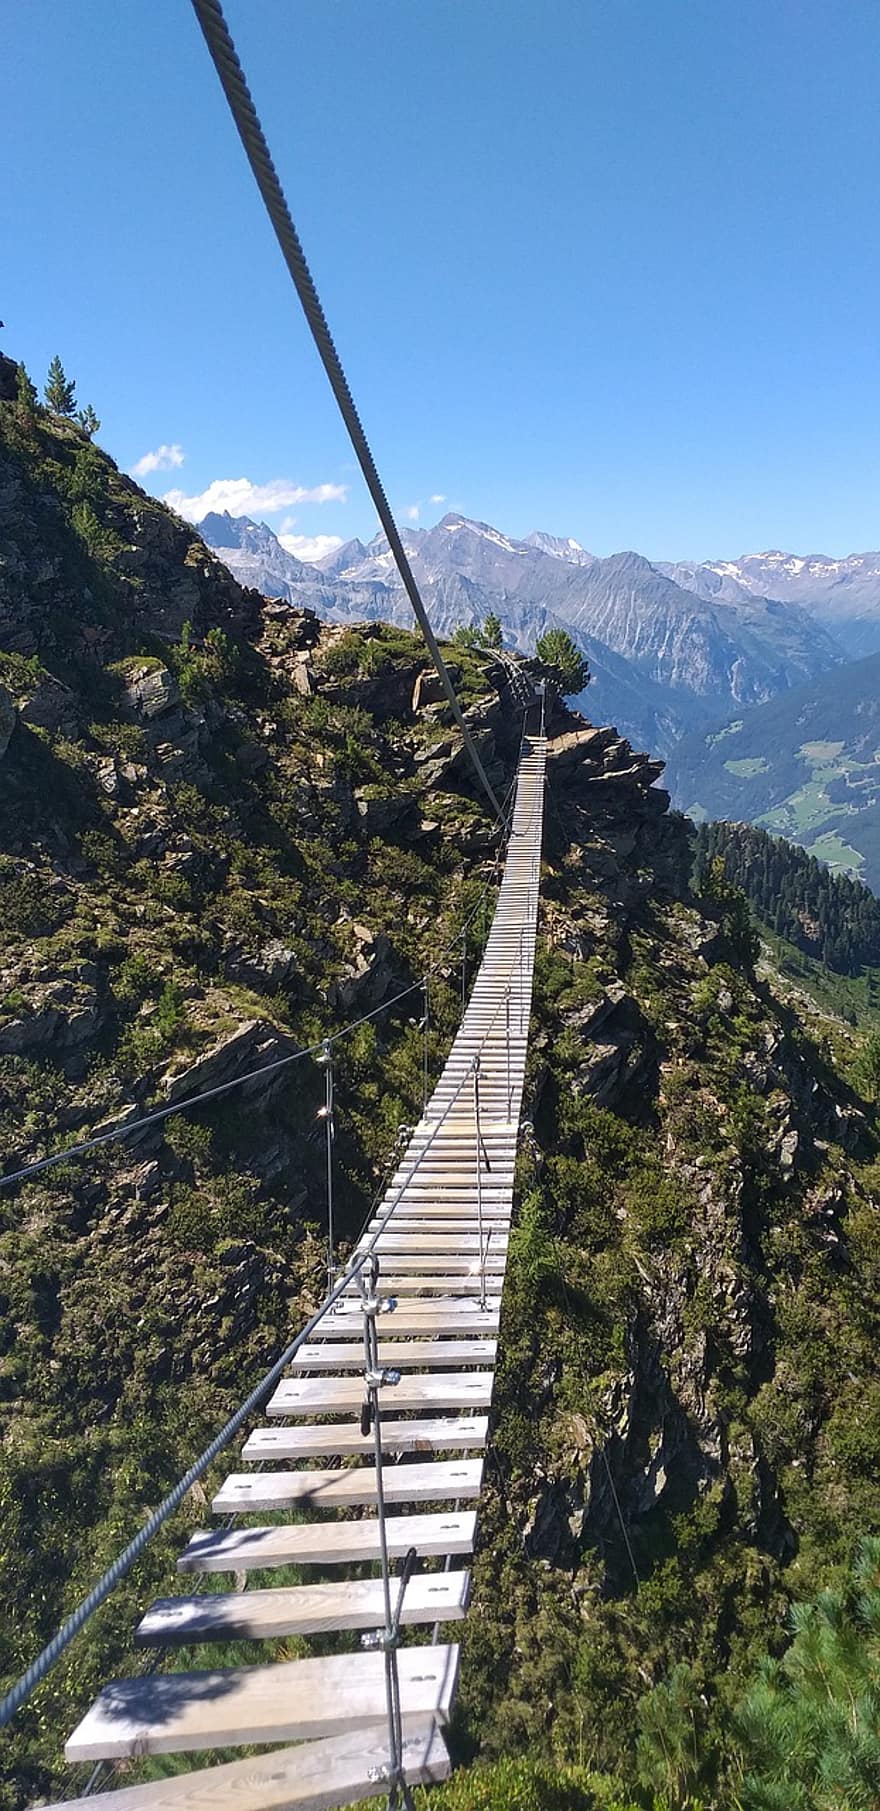 Suspension Bridge, Landscape, Mountain